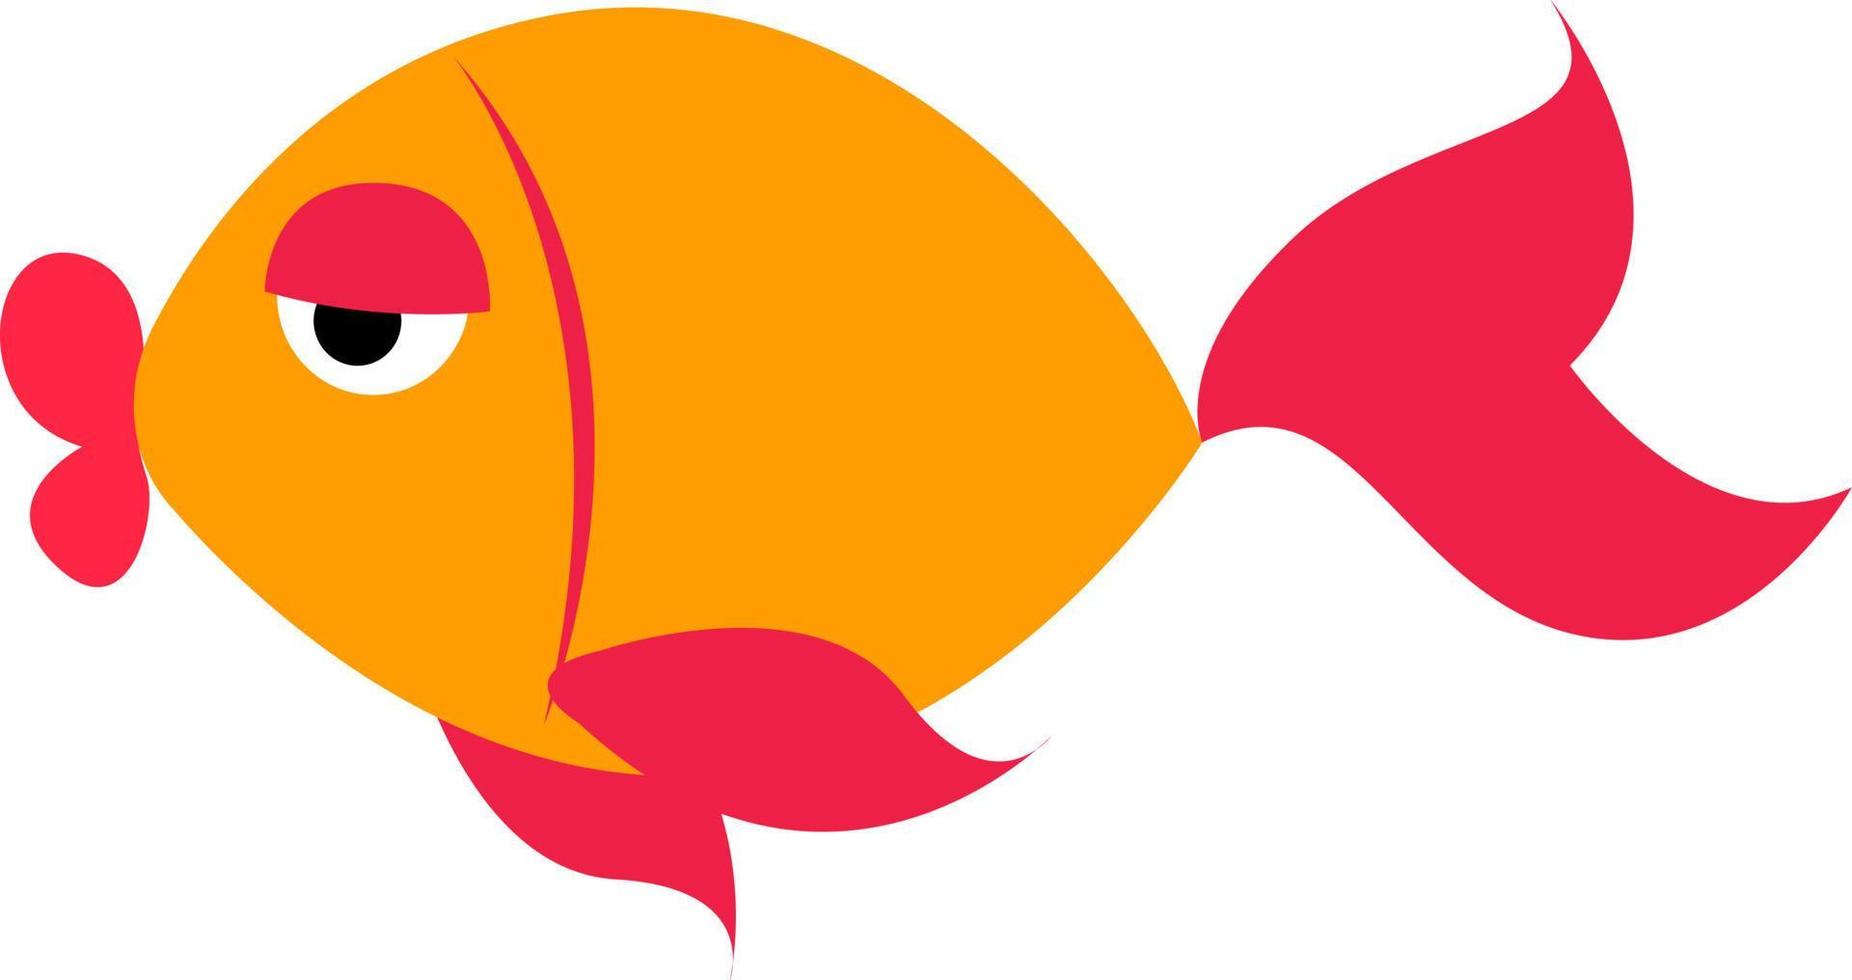 gul fisk, illustration, vektor på vit bakgrund.